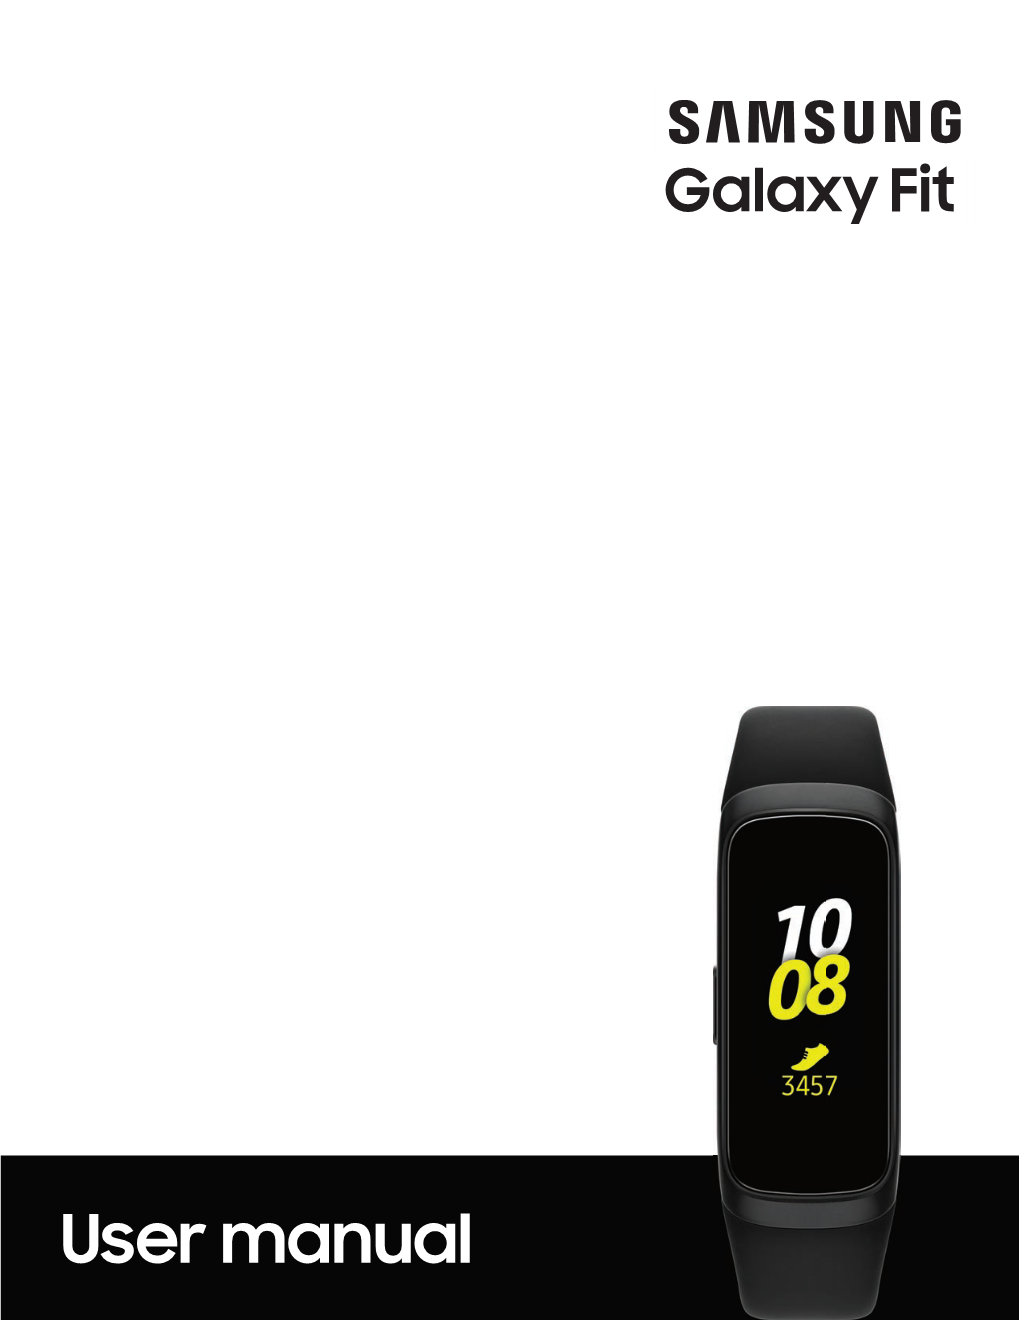 Samsung Galaxy Fit R370 User Manual